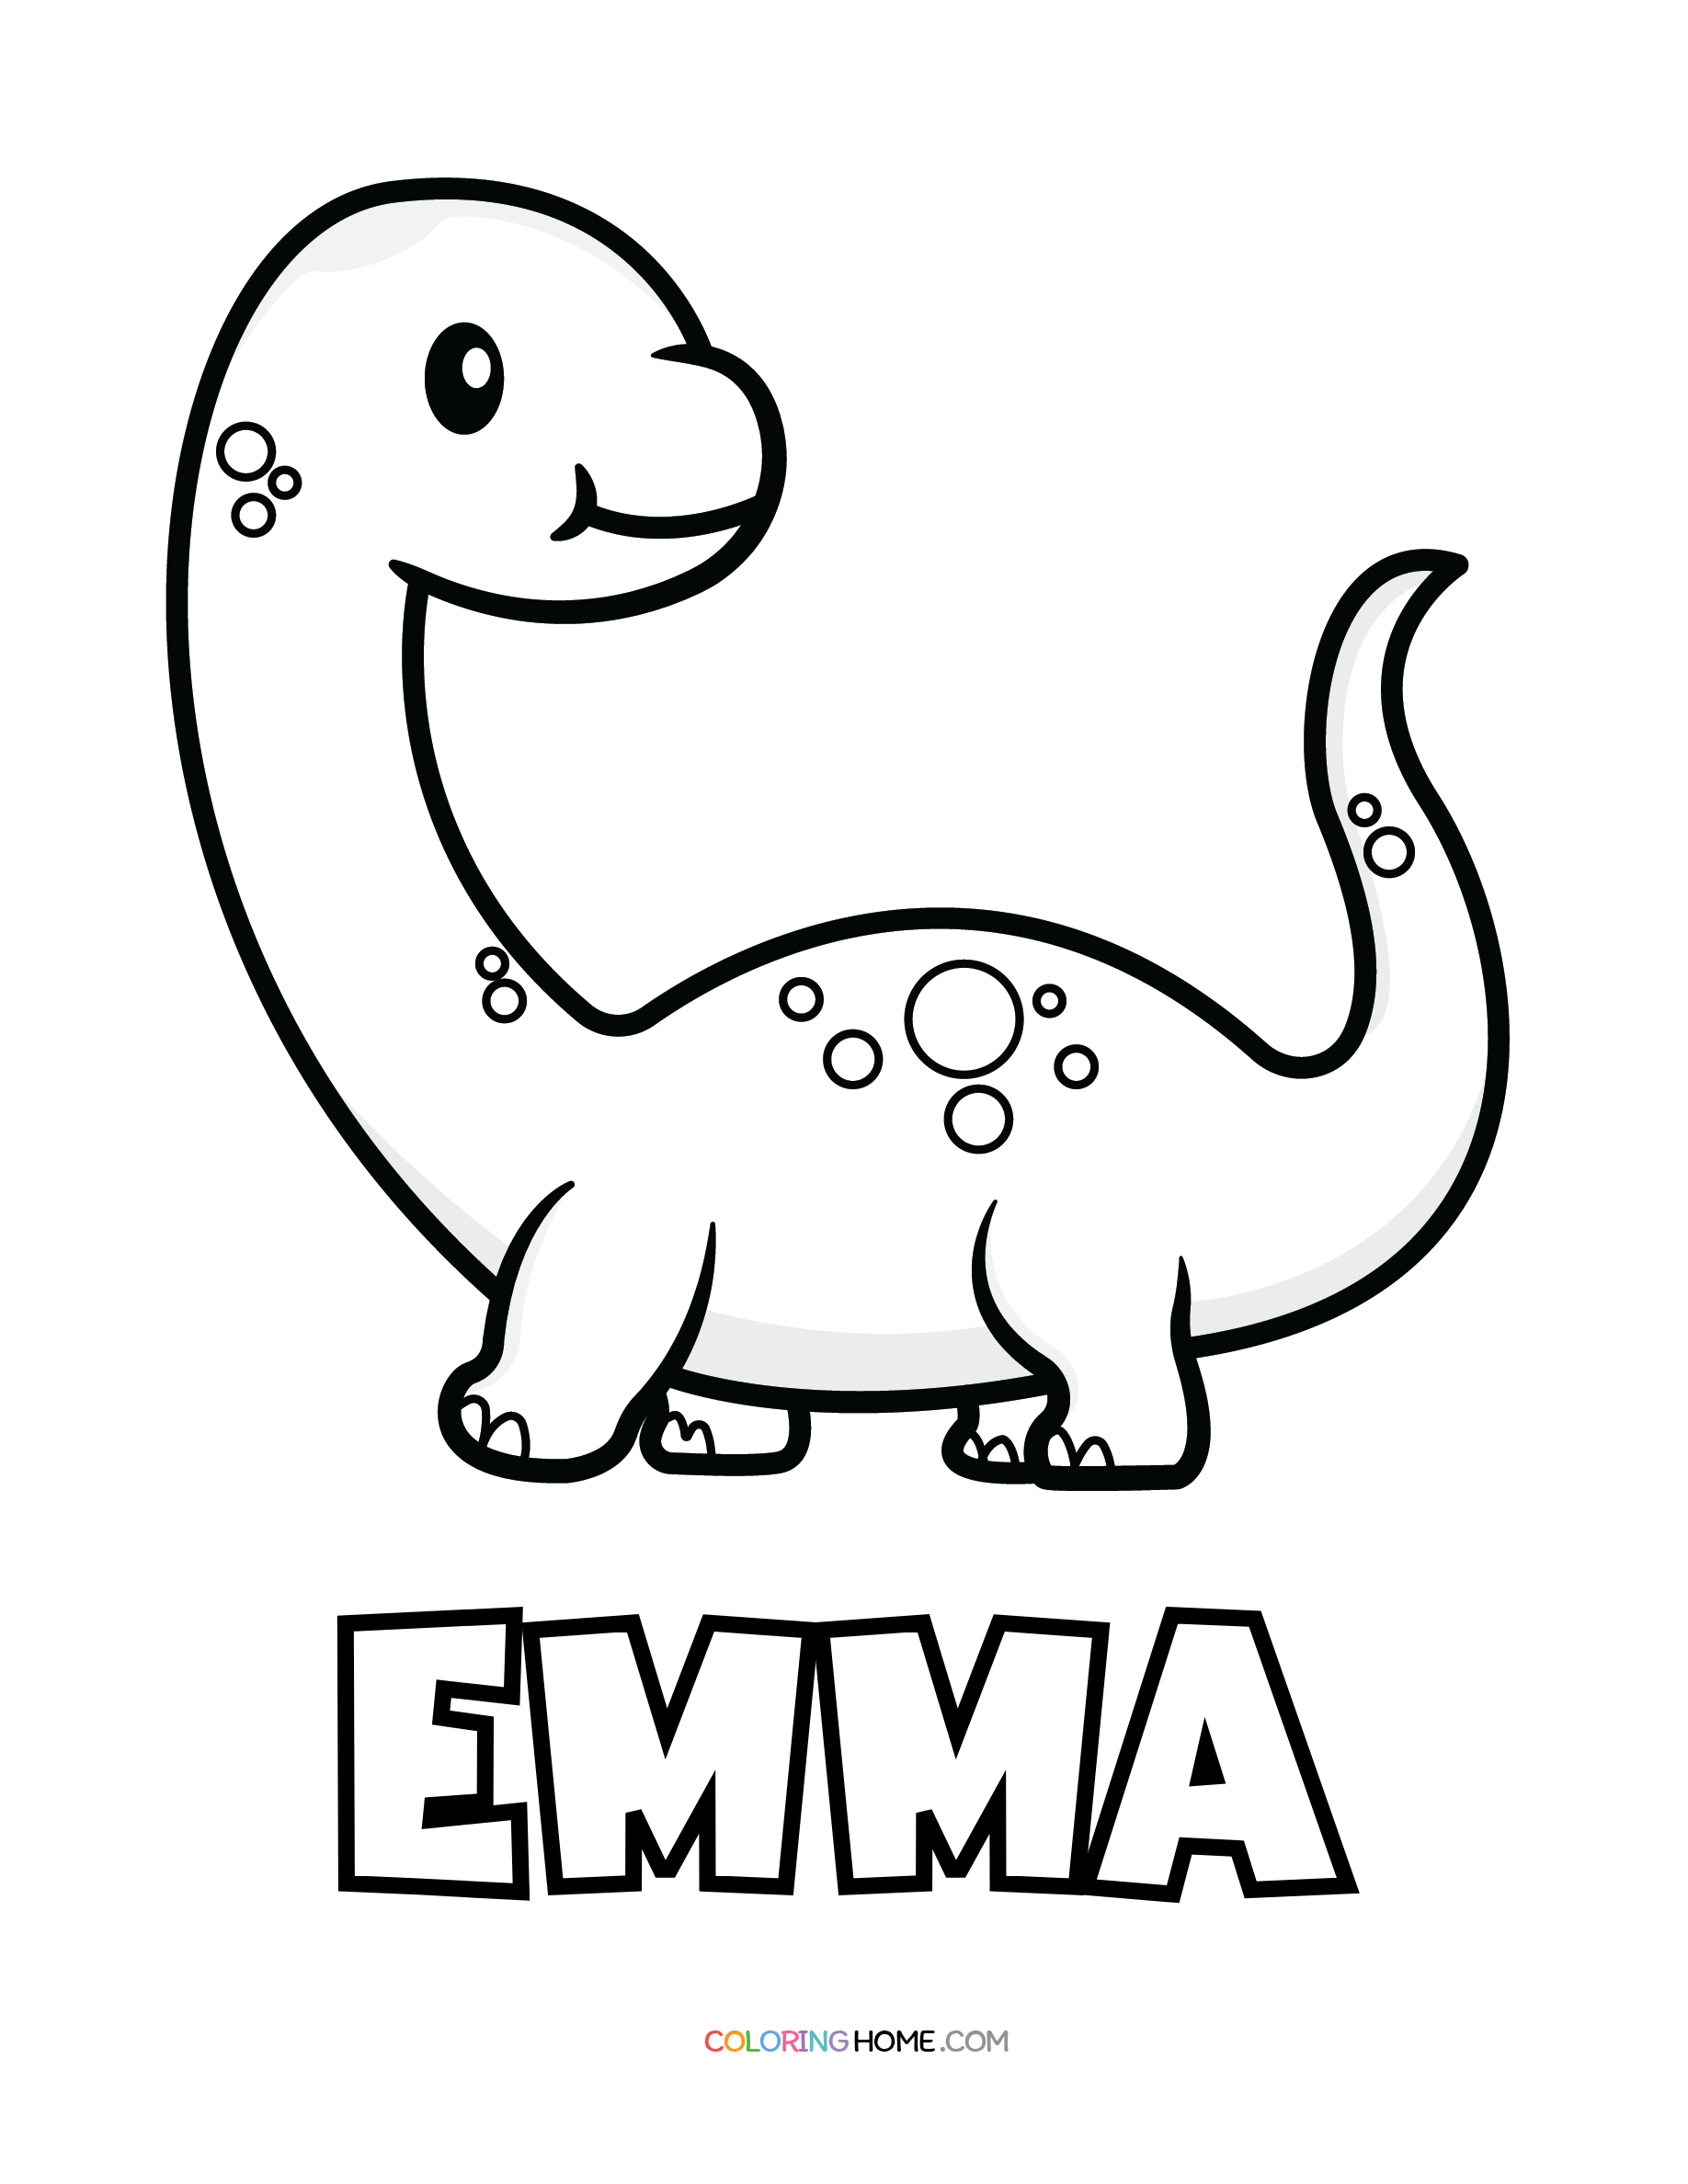 Emma dinosaur coloring page